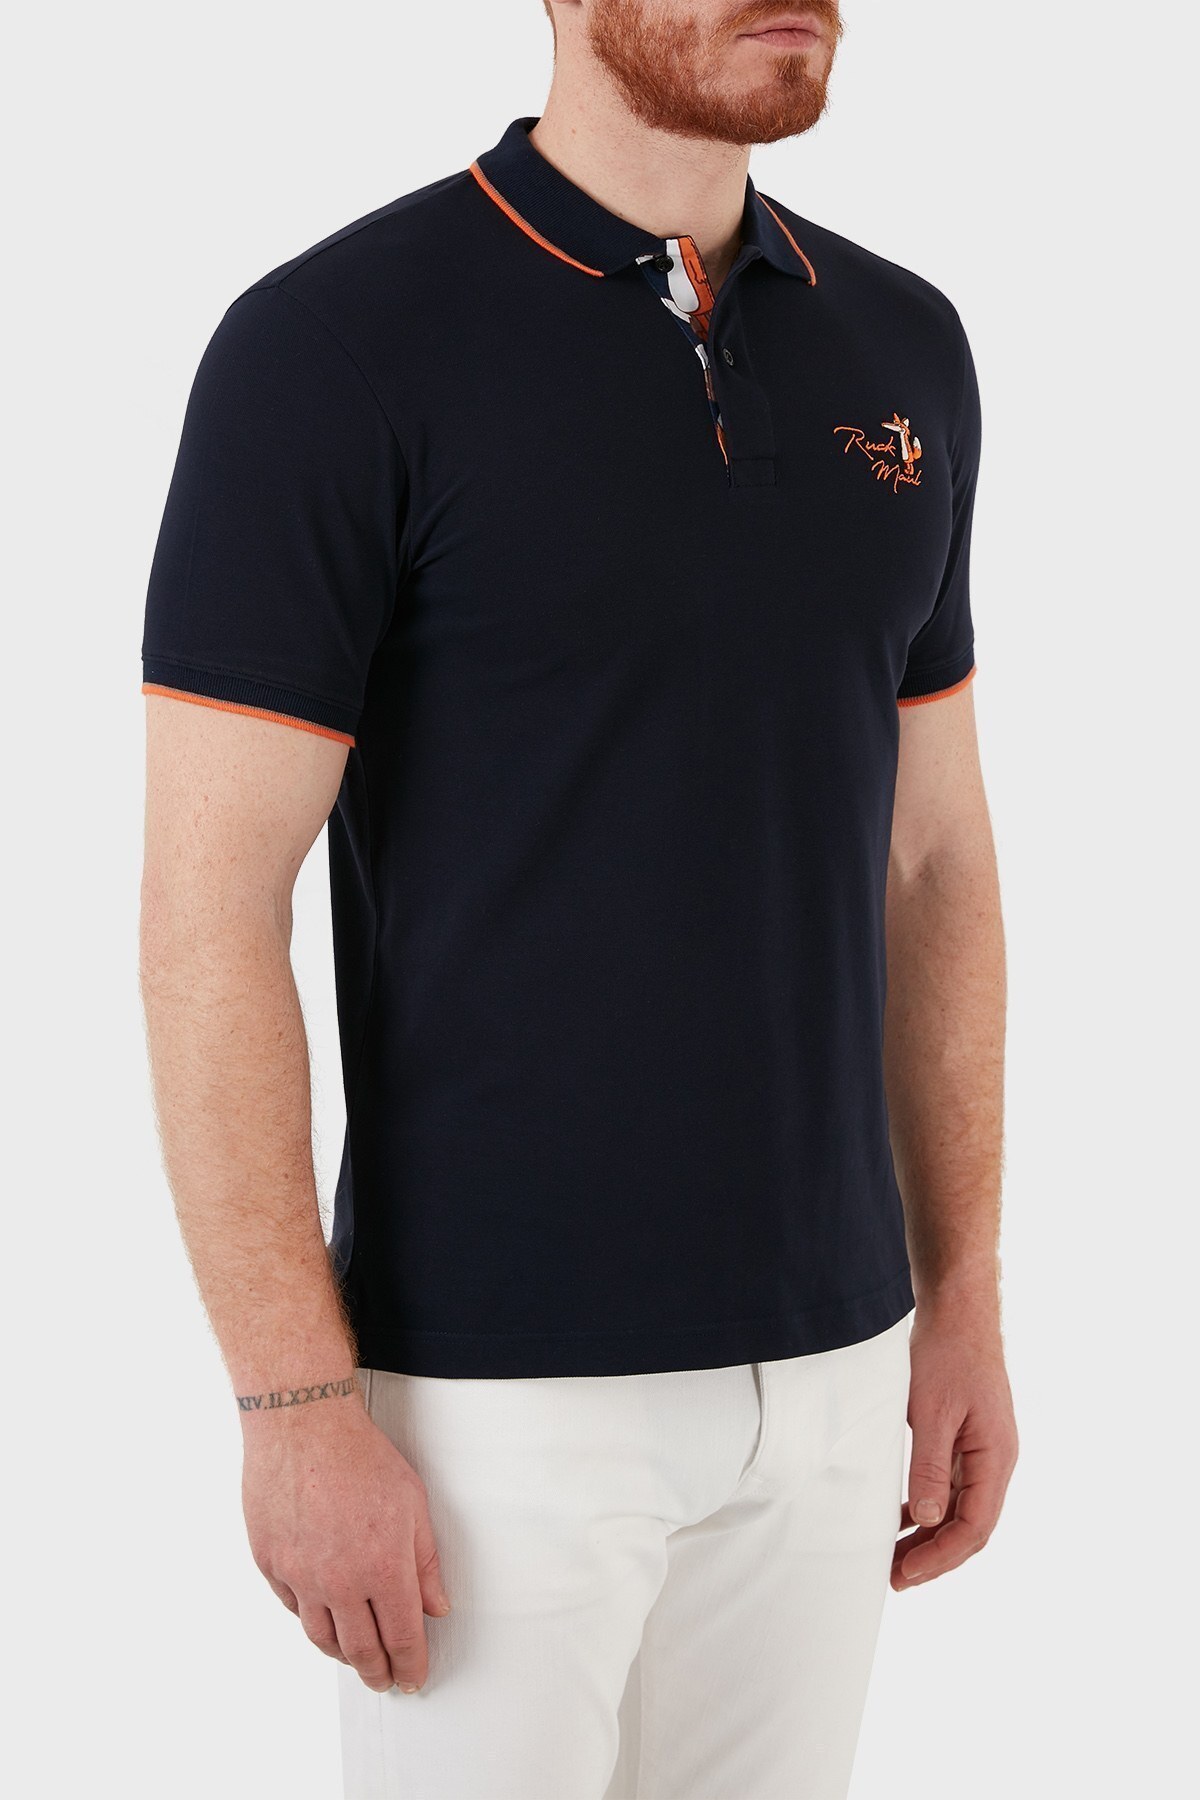 Ruck & Maul Pamuklu Düğmeli T Shirt Erkek Polo RMM01000716 LACİVERT